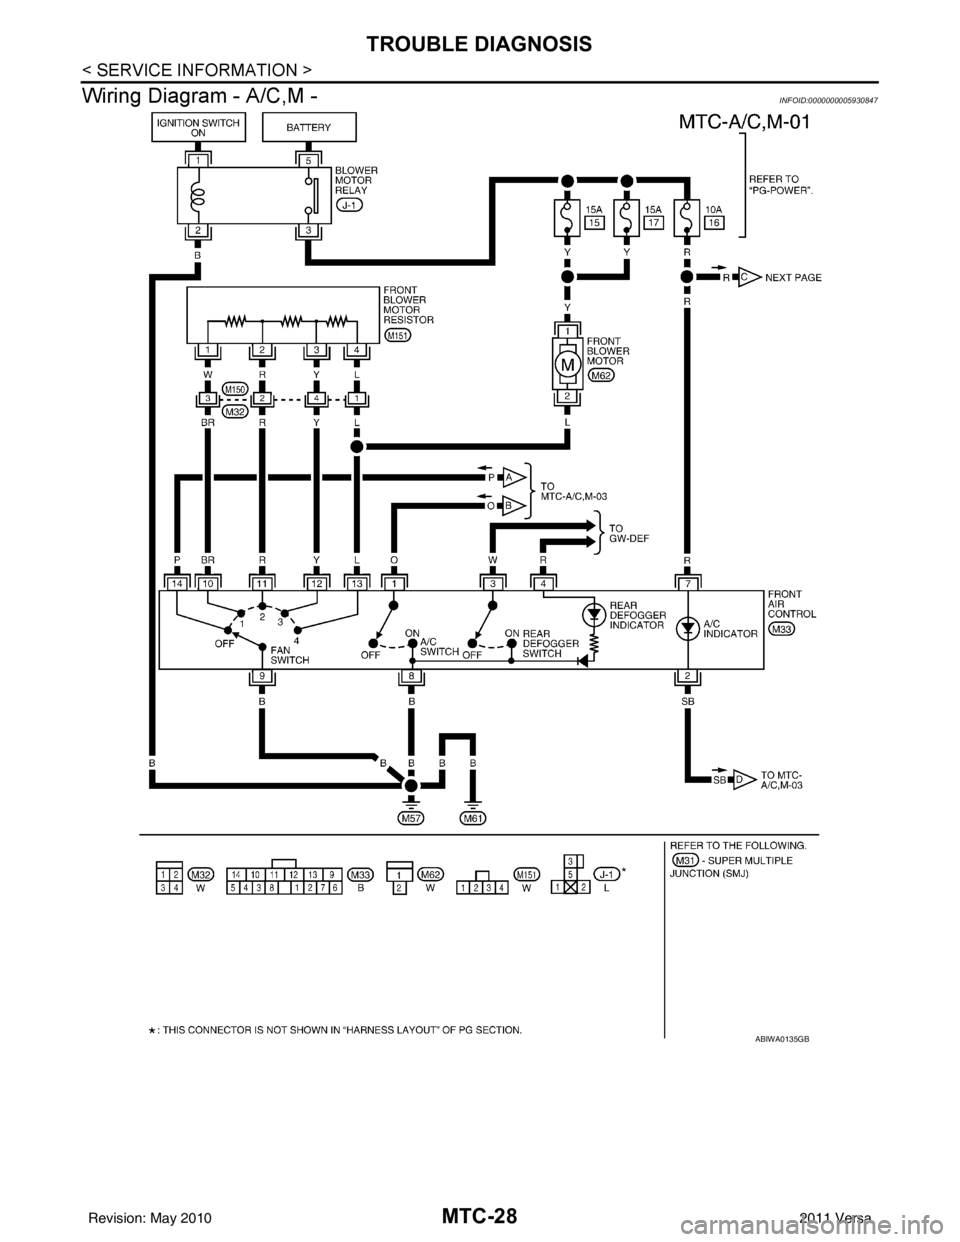 NISSAN LATIO 2011  Service Repair Manual MTC-28
< SERVICE INFORMATION >
TROUBLE DIAGNOSIS
Wiring Diagram - A/C,M -
INFOID:0000000005930847
ABIWA0135GB
Revision: May 2010 2011 Versa 